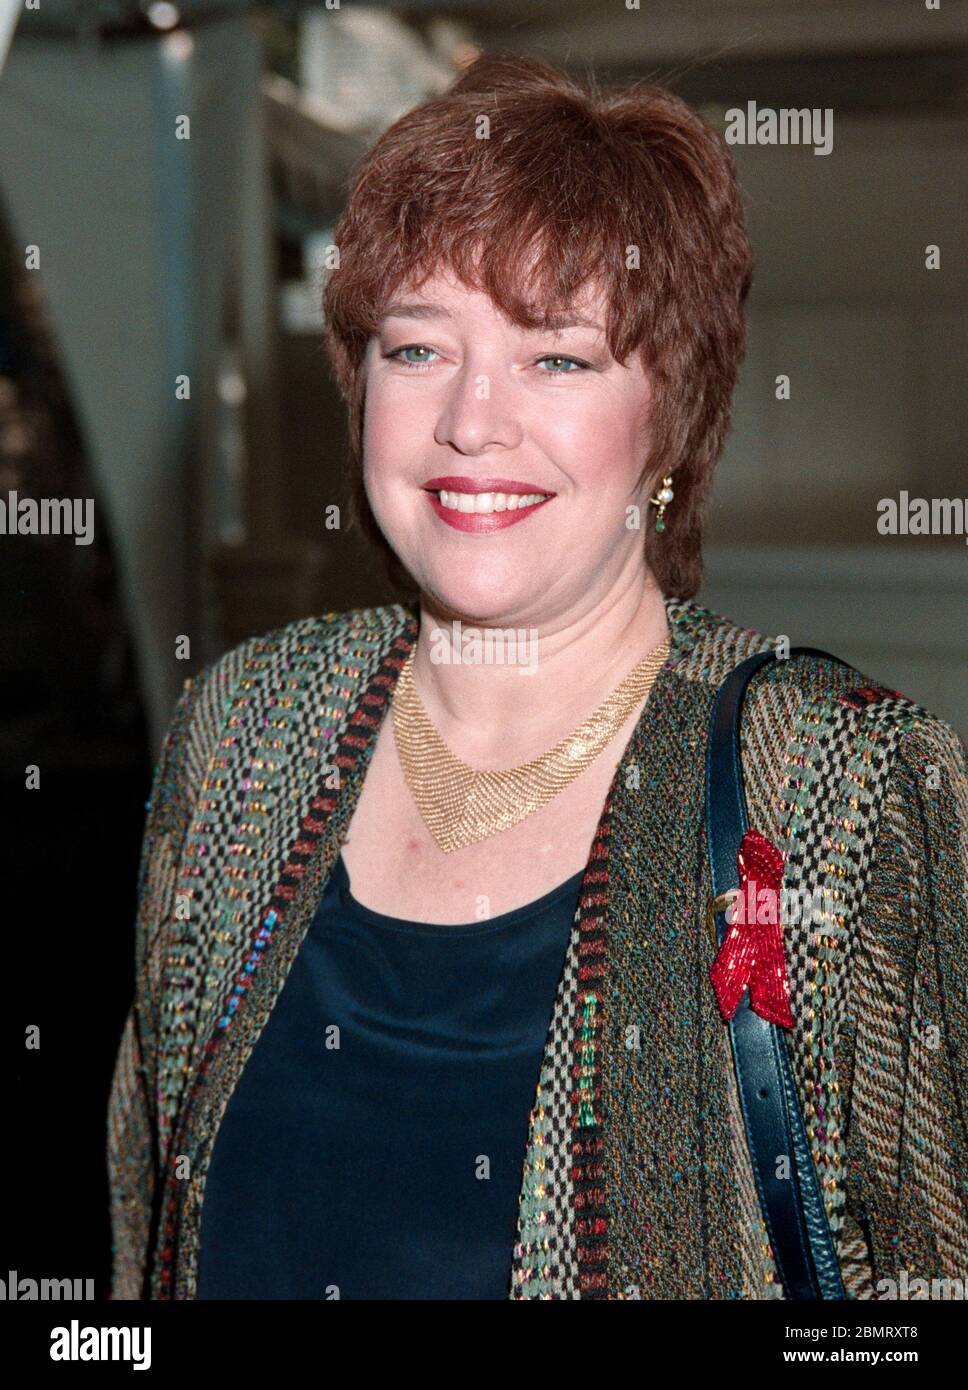 LOS ANGELES, CALIFORNIA. 21 marzo 1993: Attrice Kathy Bates al BAFTA Awards di Los Angeles. Foto file © Paul Smith/Featureflash Foto Stock